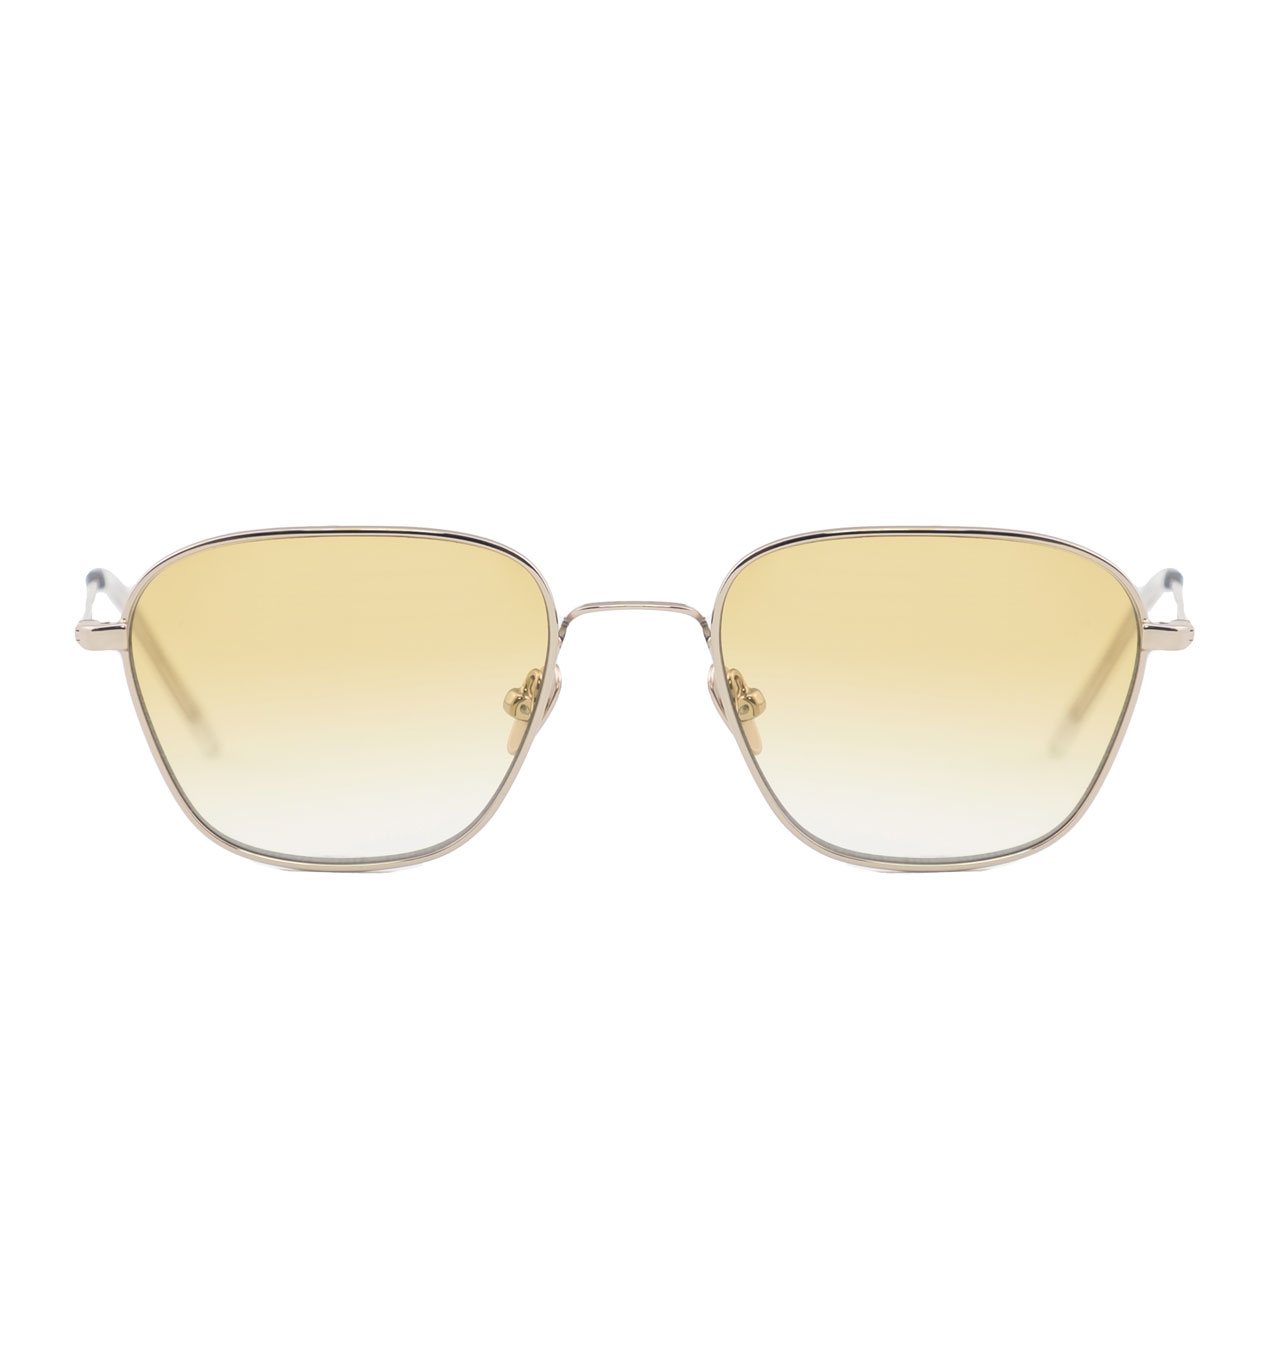 Monokel Eyewear - Otis Silver Sunglasses - Yellow Gradient Lens